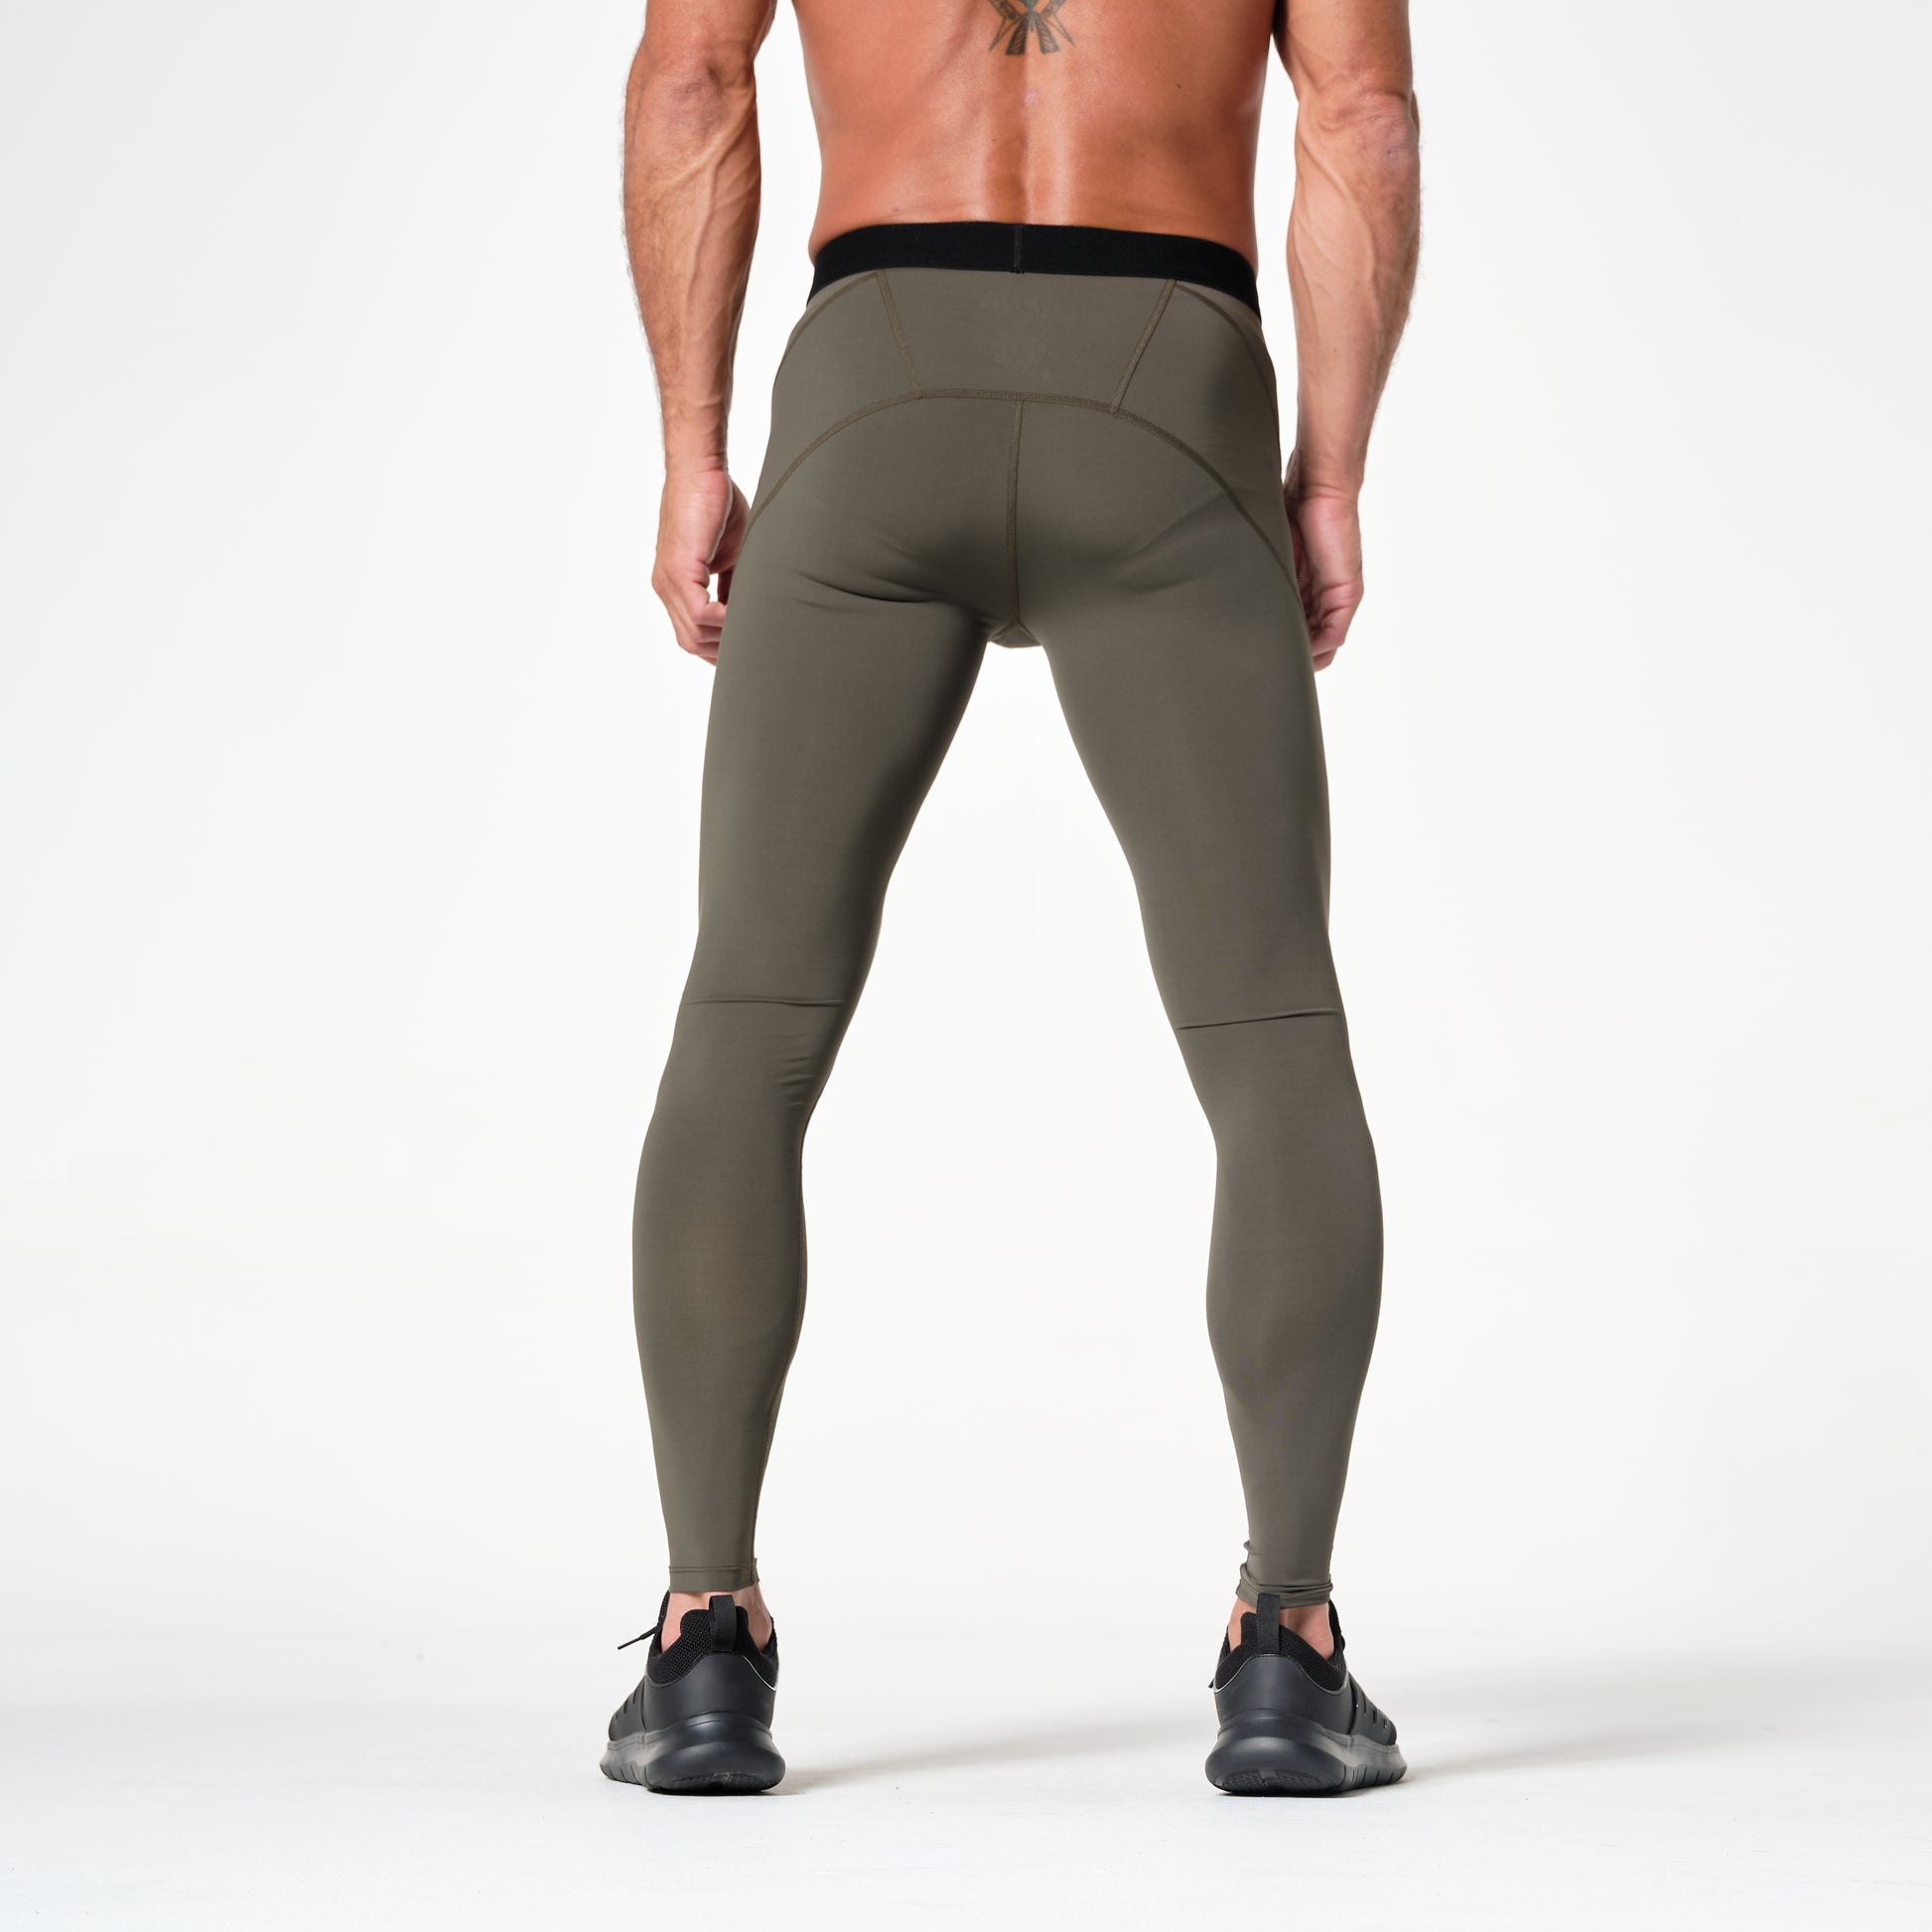 Buy NEVER LOSE Men's Compression Pants, Athletic Active Yoga